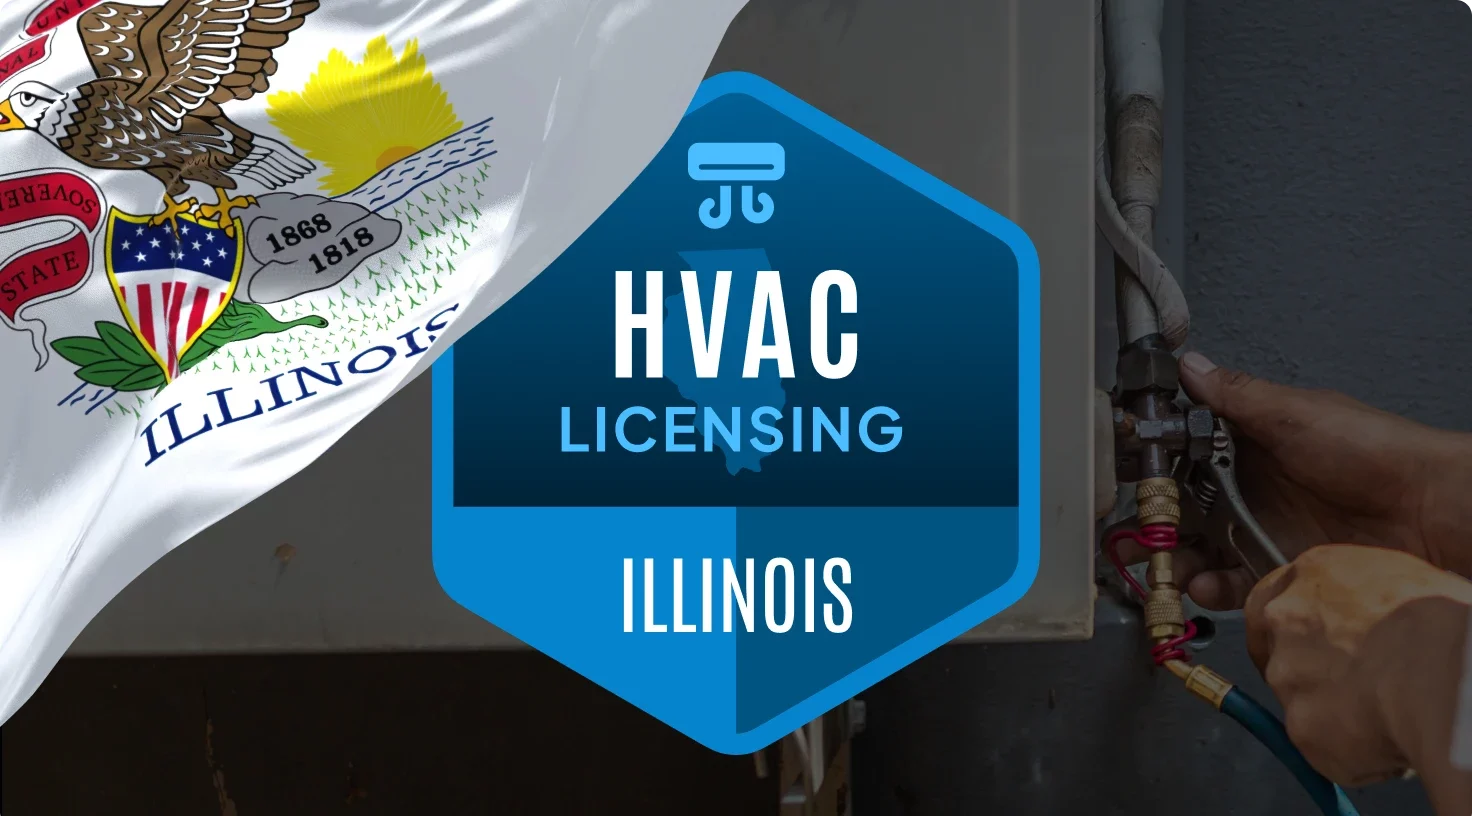 Hvac Illinois License Aspect Ratio 1472 818 Aspect Ratio 1472 816